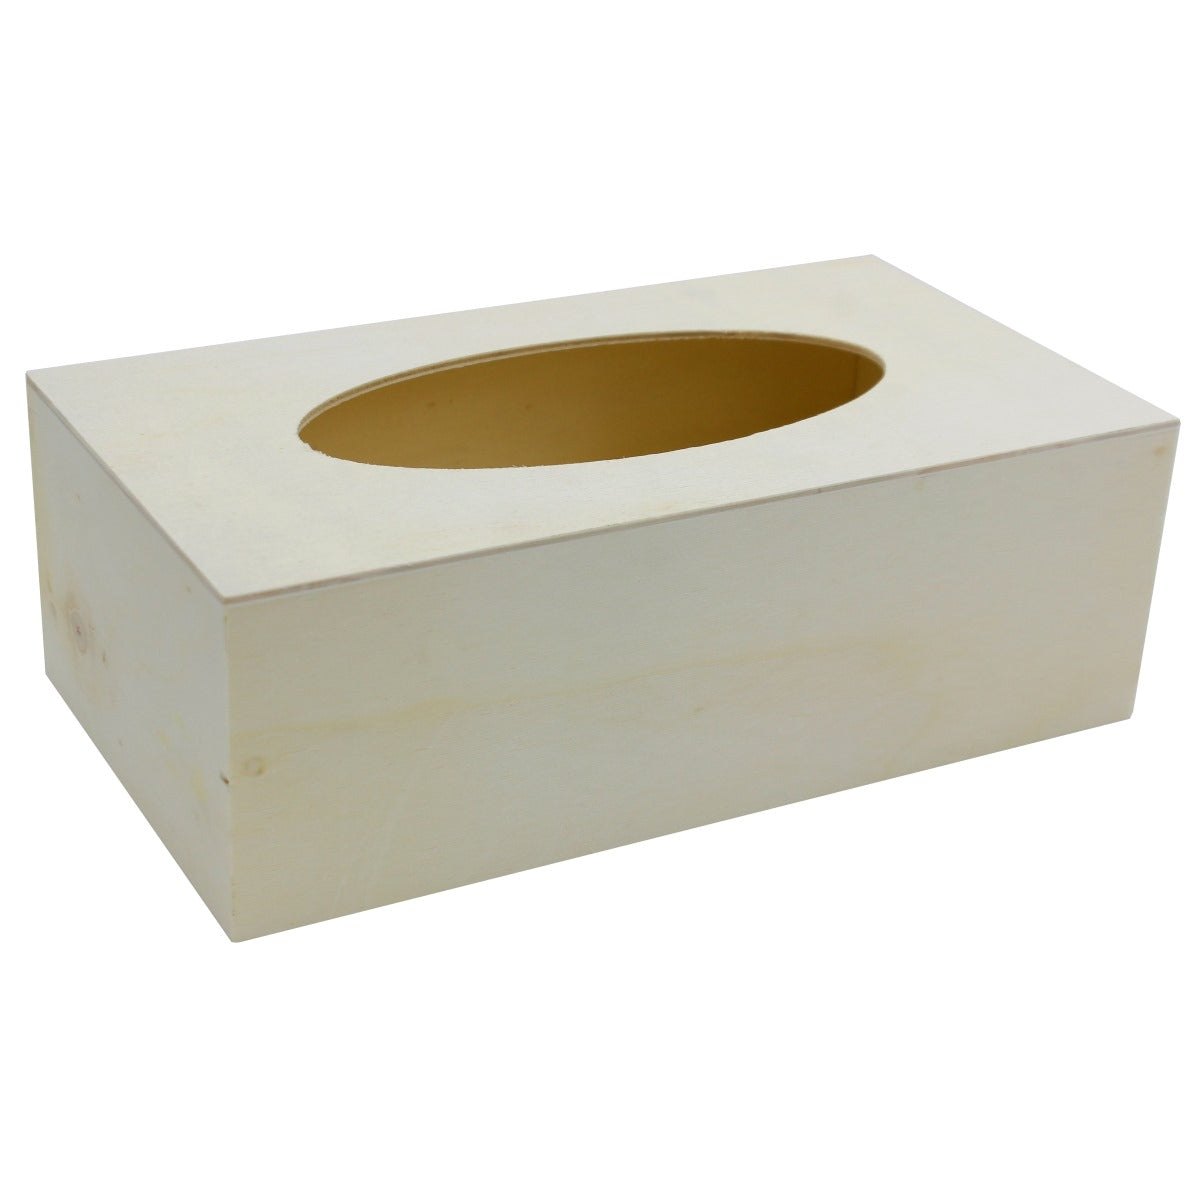 jags-mumbai Wooden Box Wooden Decoupage Tissue Box Big - Contain 1 Unit